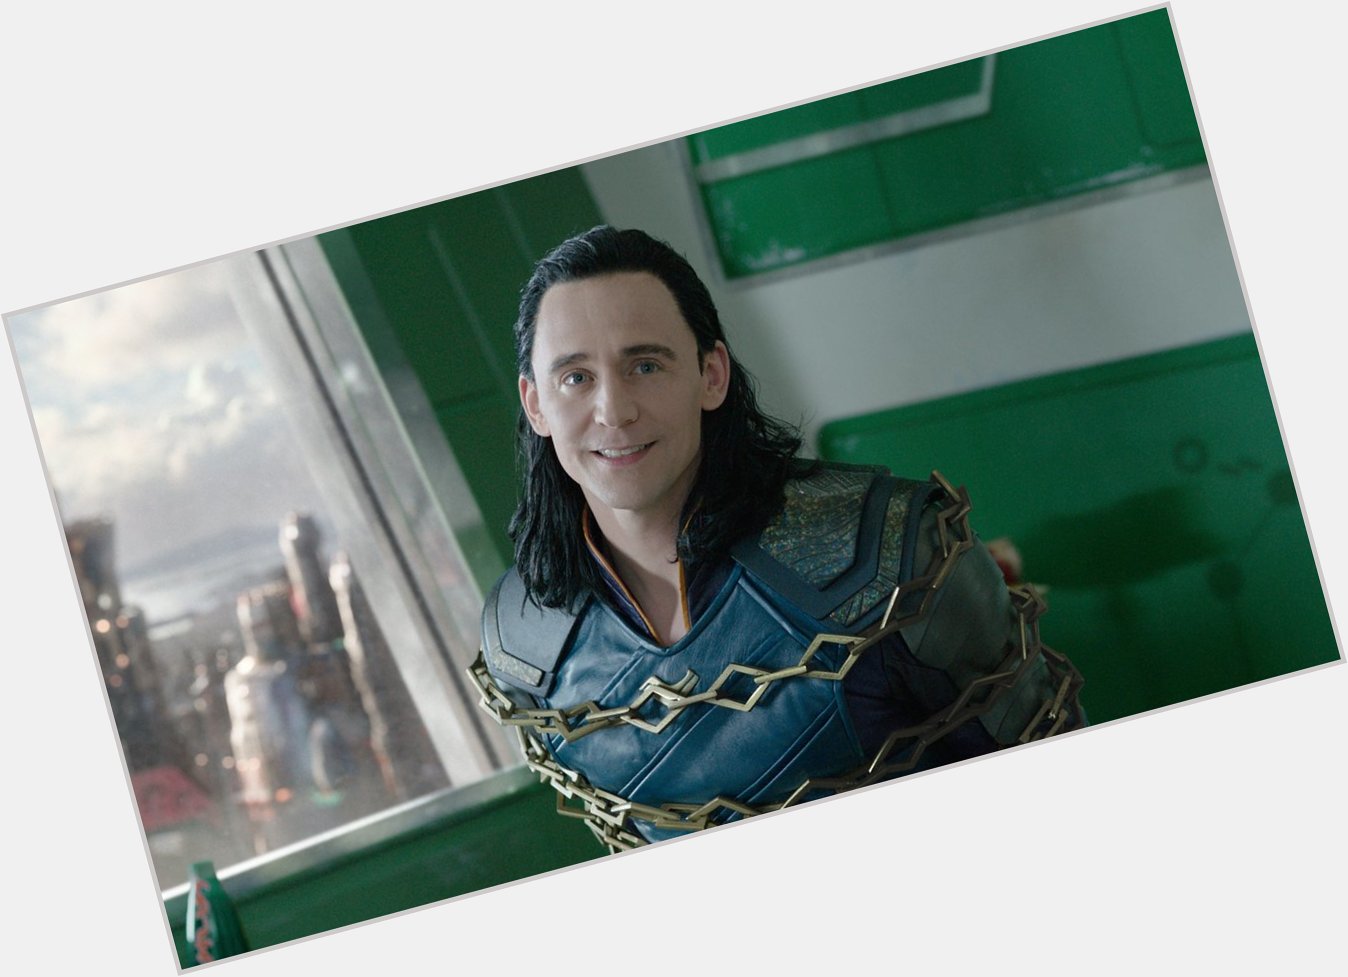 Do you think Tom Hiddleston likes big birthday parties or keeps it Loki? Either way, happy birthday! 